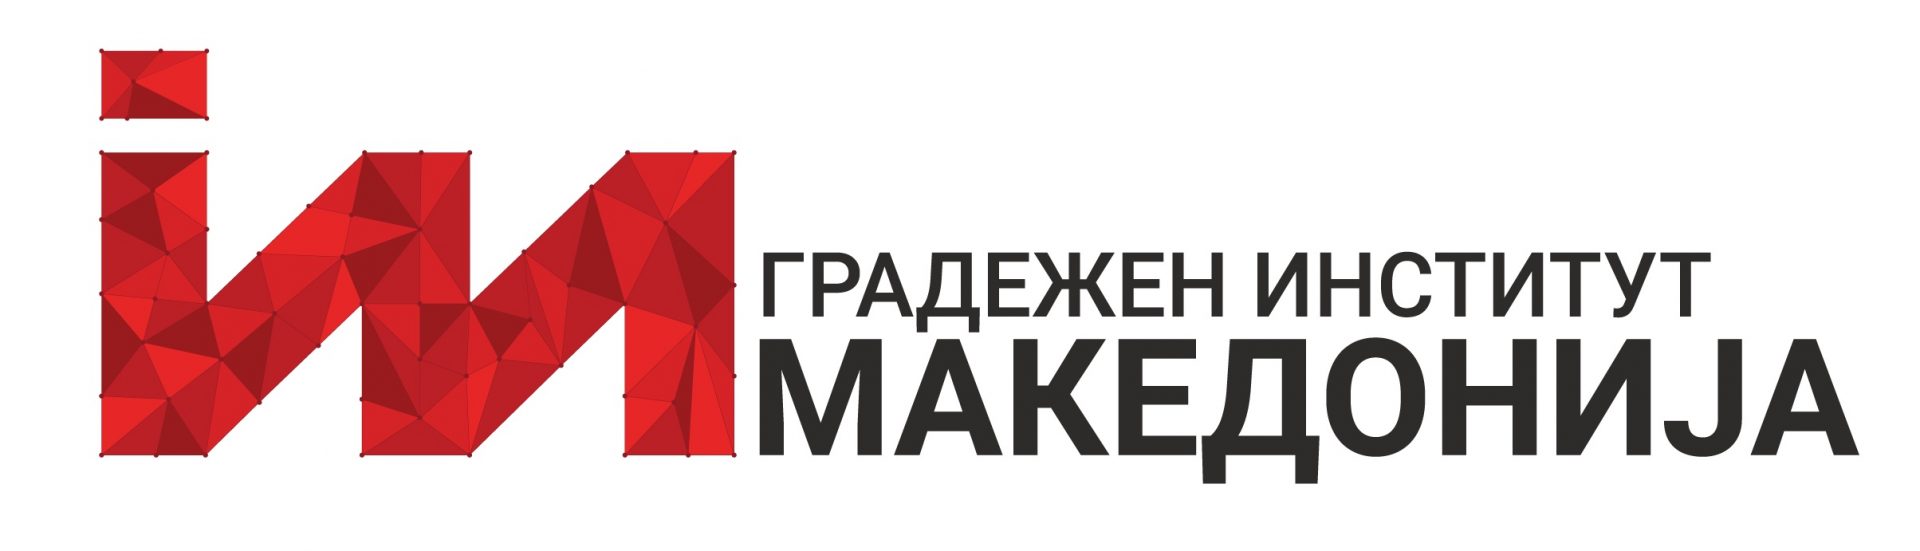 Gradezhen Institut Makedonija logo